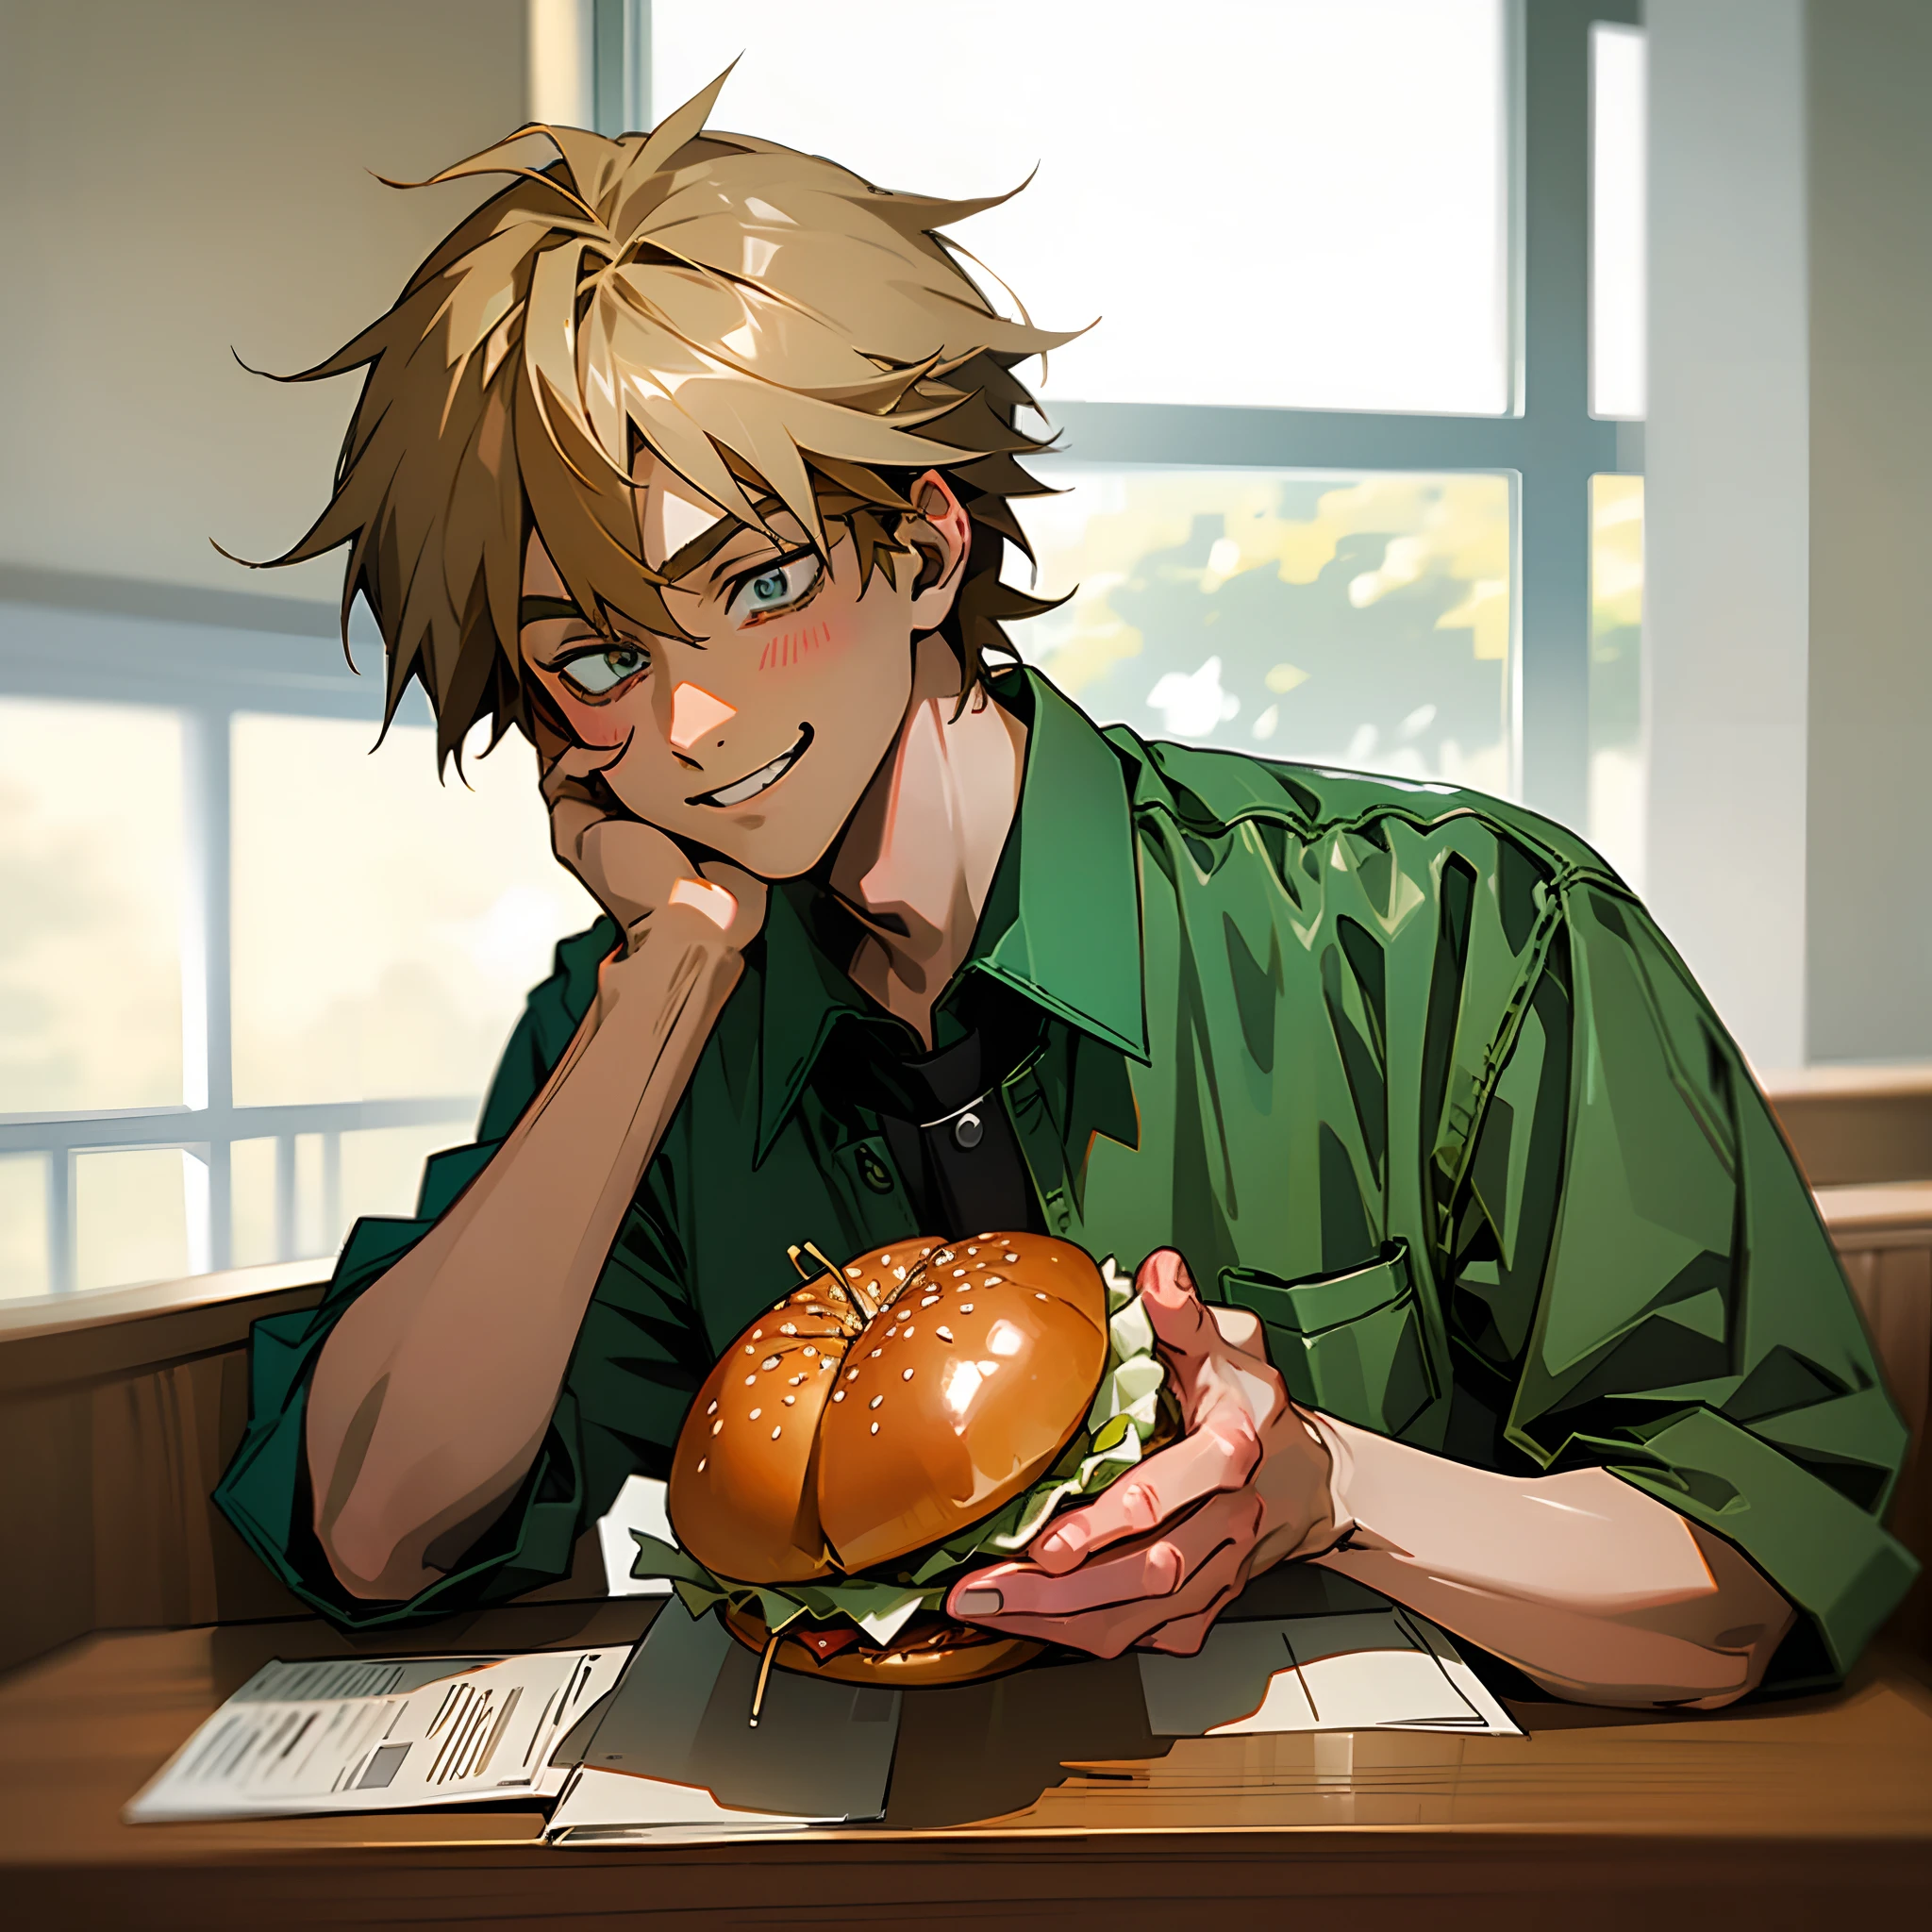 redakanekocat anime girl eating burger : r/ImaginarySliceOfLife